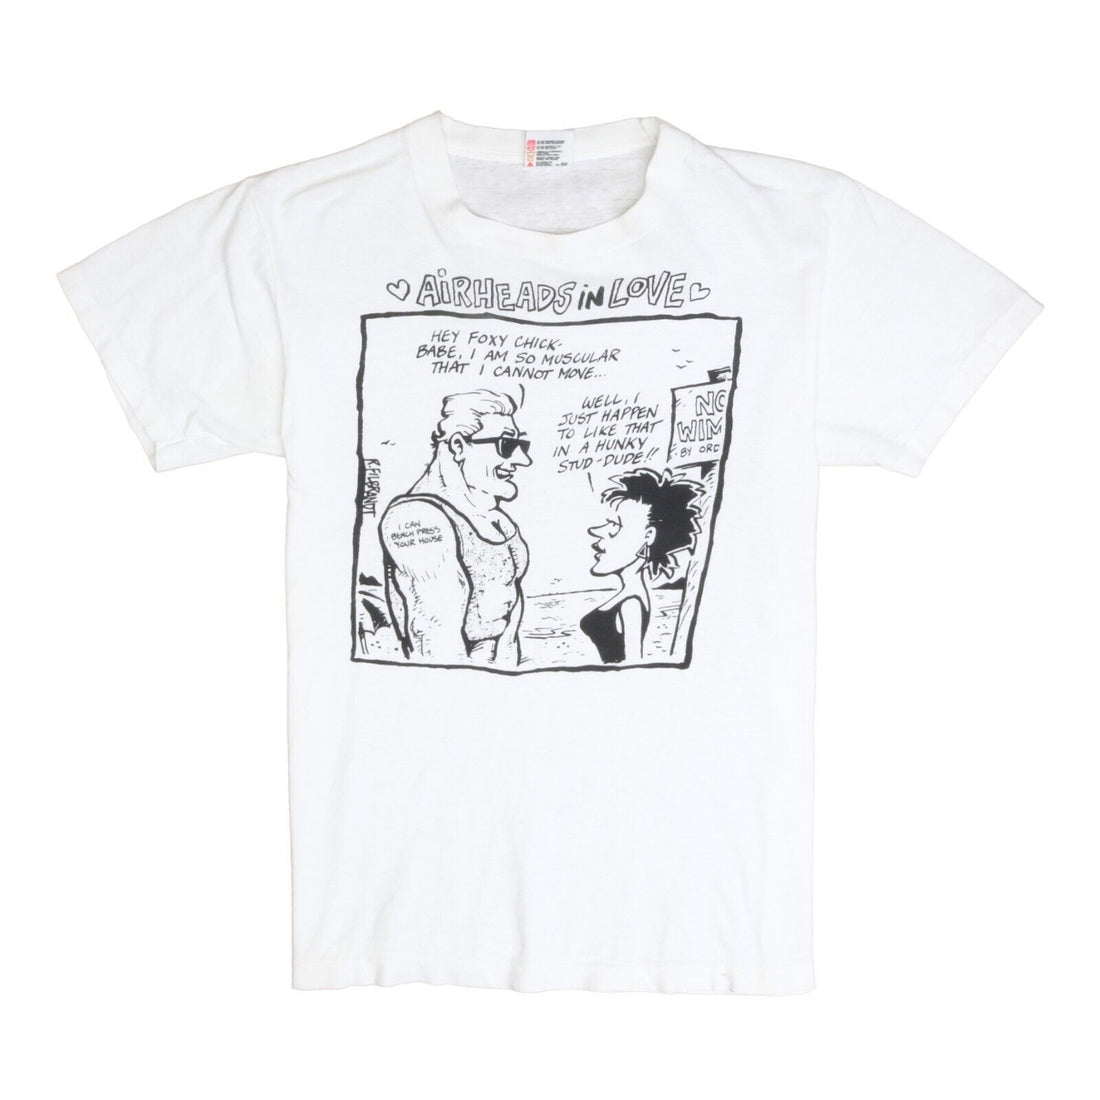 Vintage Airheads In Love Comic Strip T-Shirt Size Medium White 90s